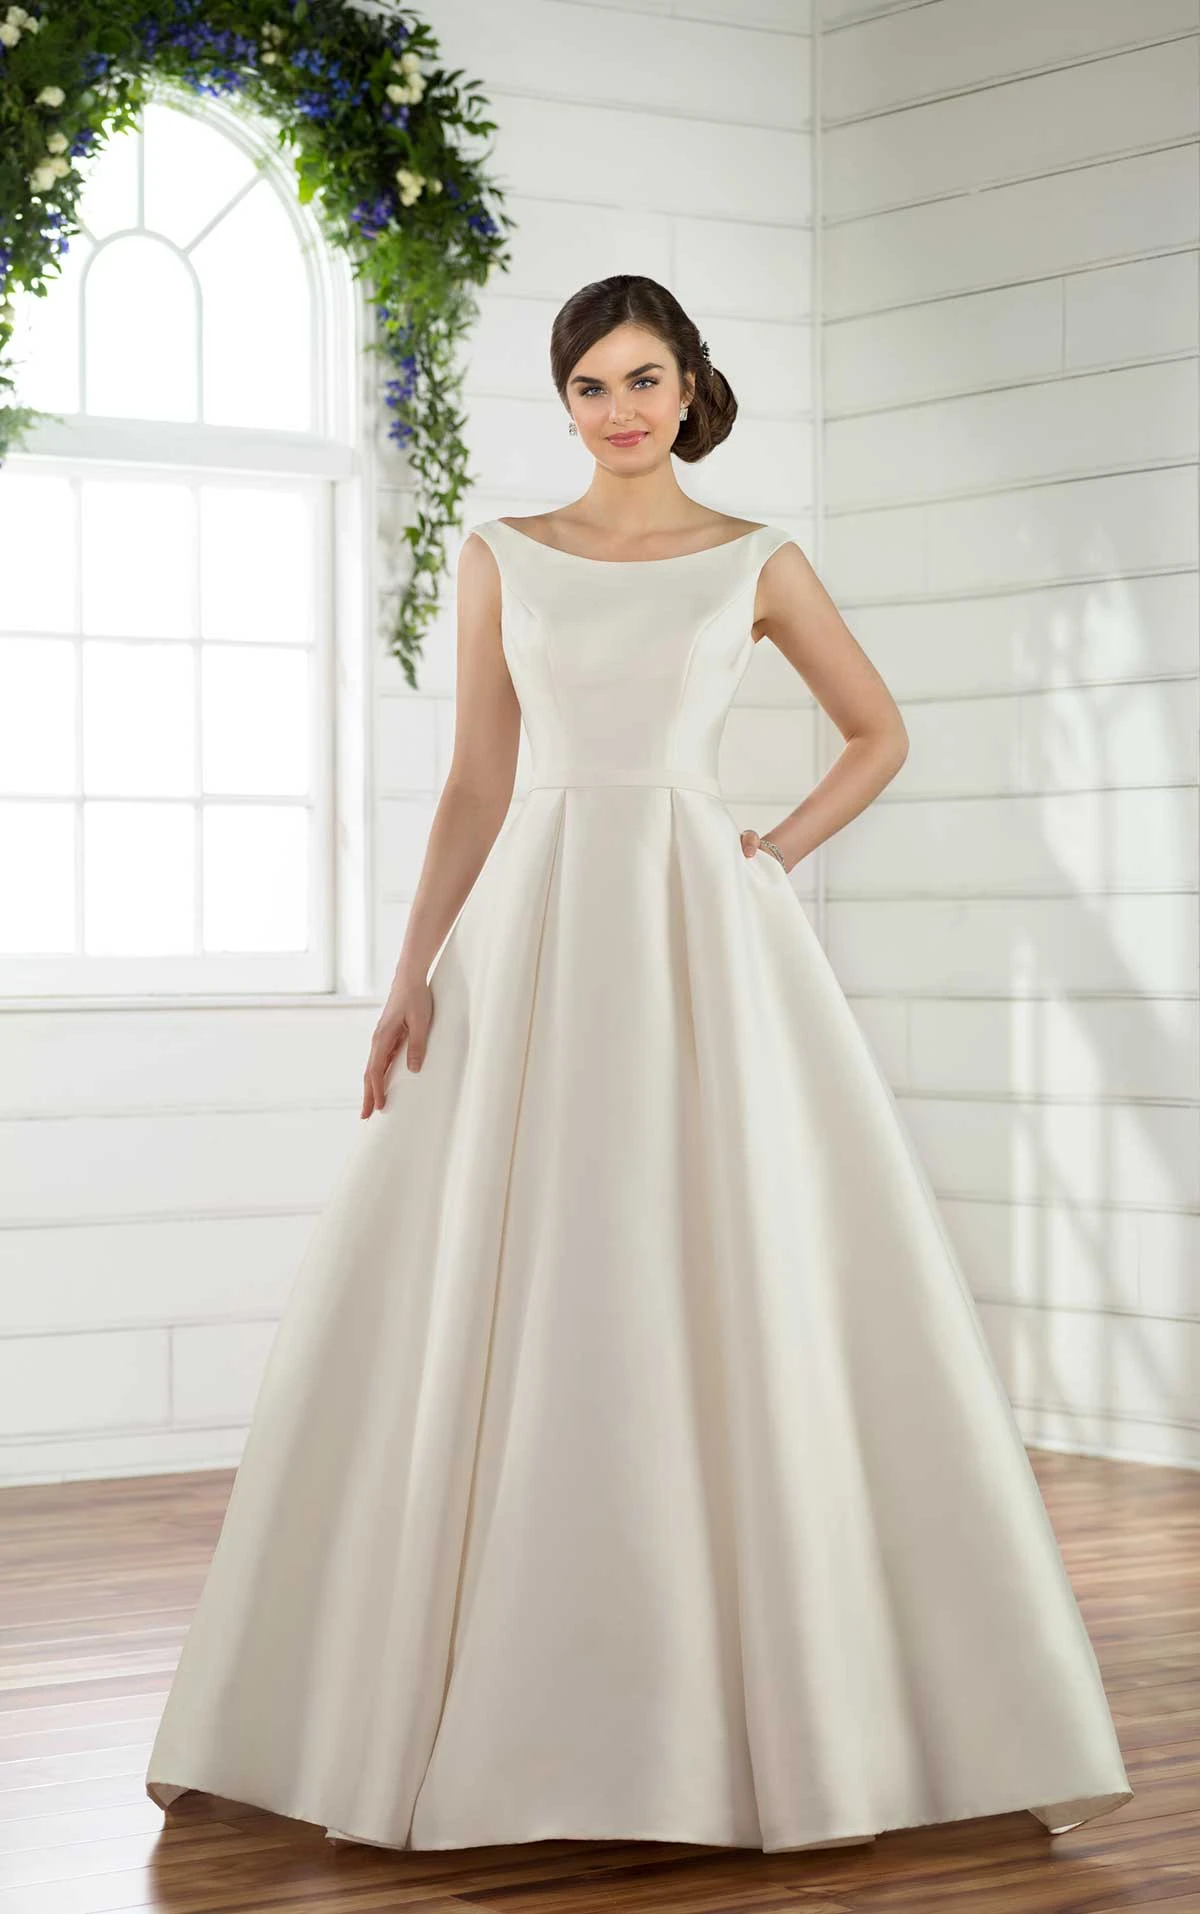 classic style wedding dresses